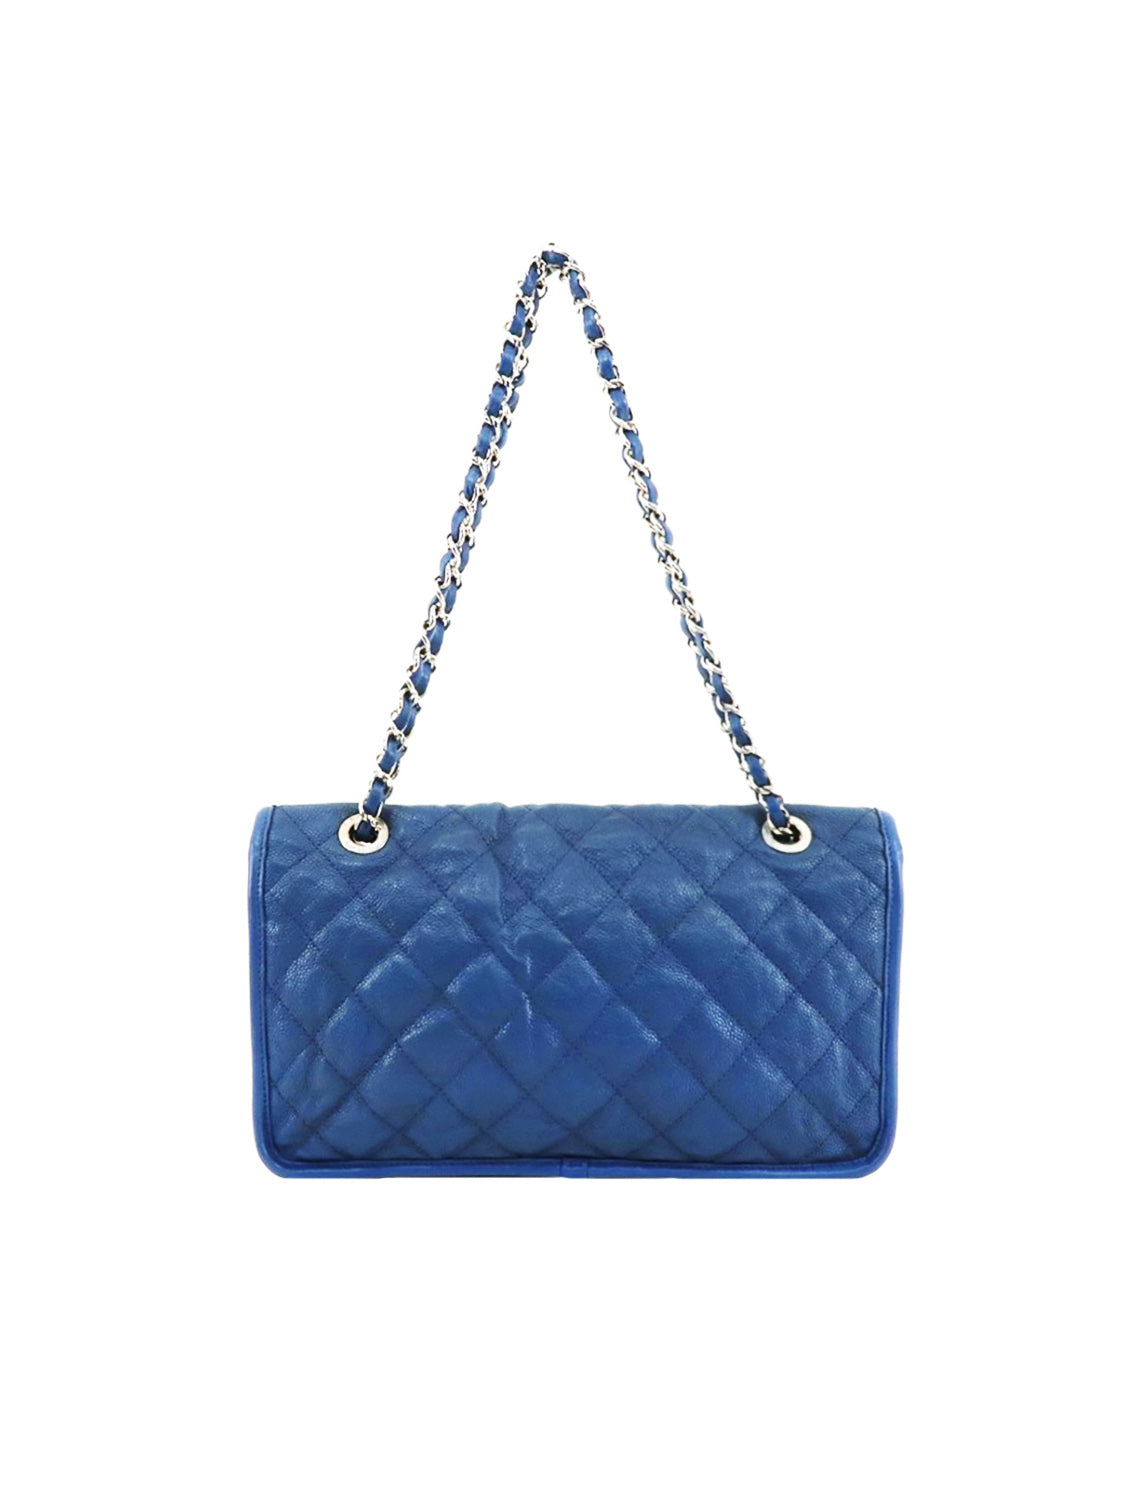 Chanel 2010s Blue Leather Trimmed Rare Handbag